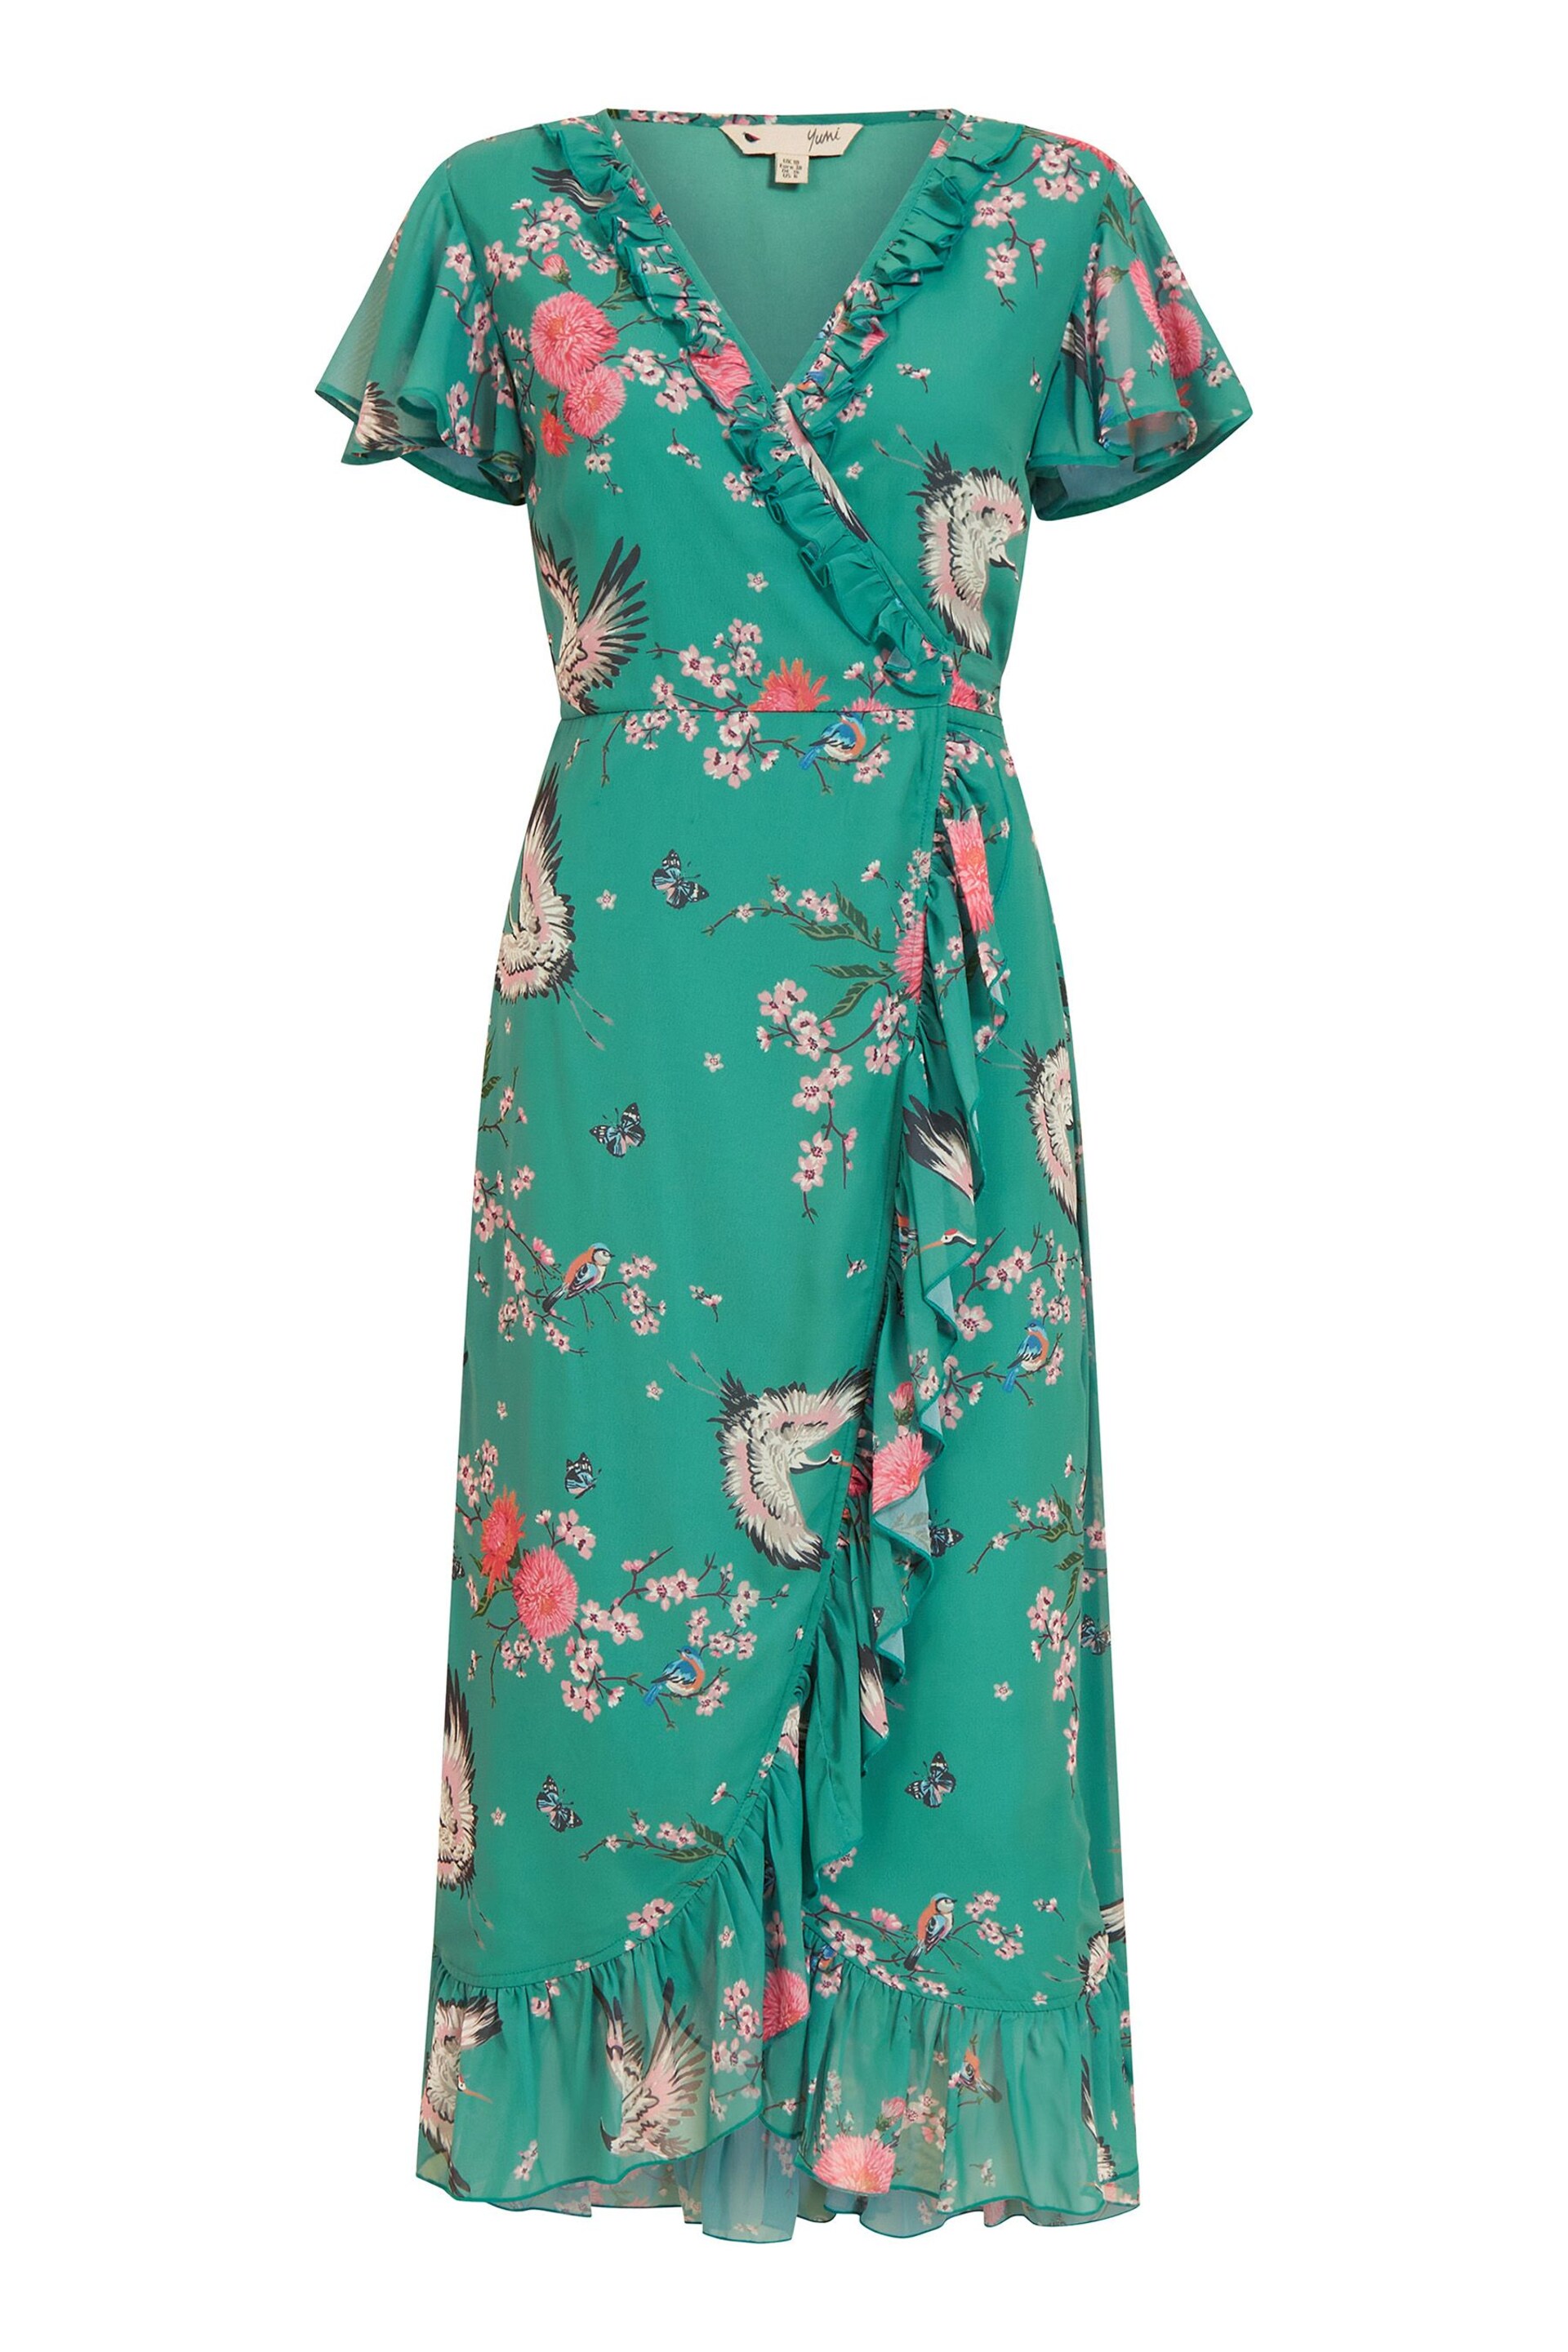 Yumi Green Satin Crane Print Wrap Dress - Image 5 of 5